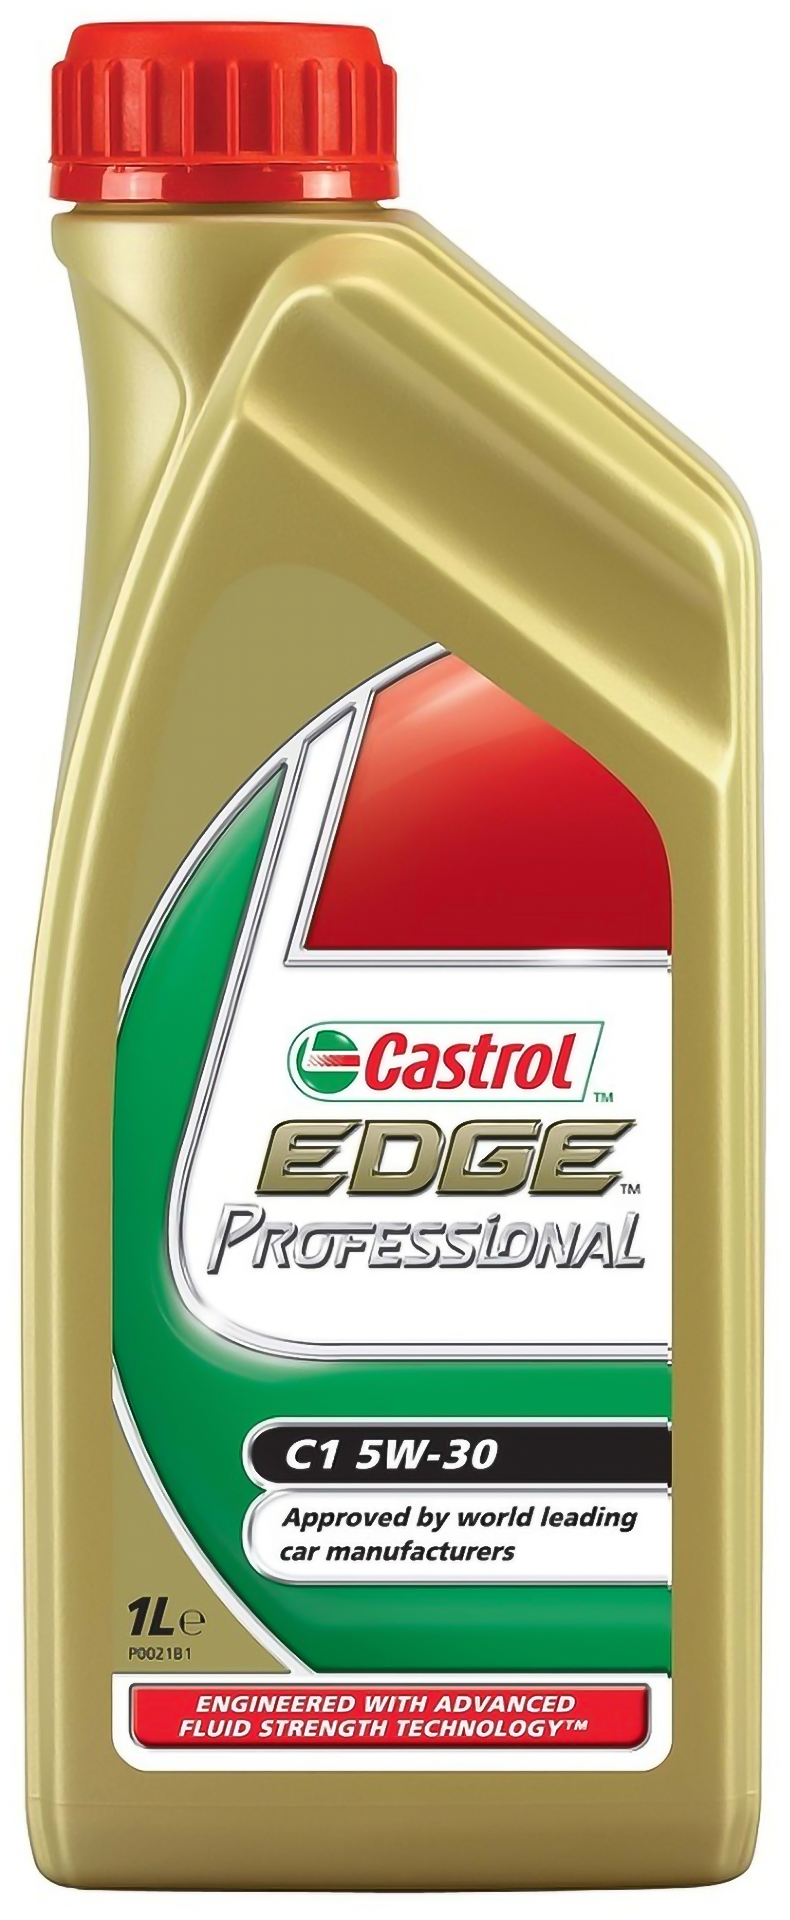 Castrol Edge Professional C1 5w30, 1L 